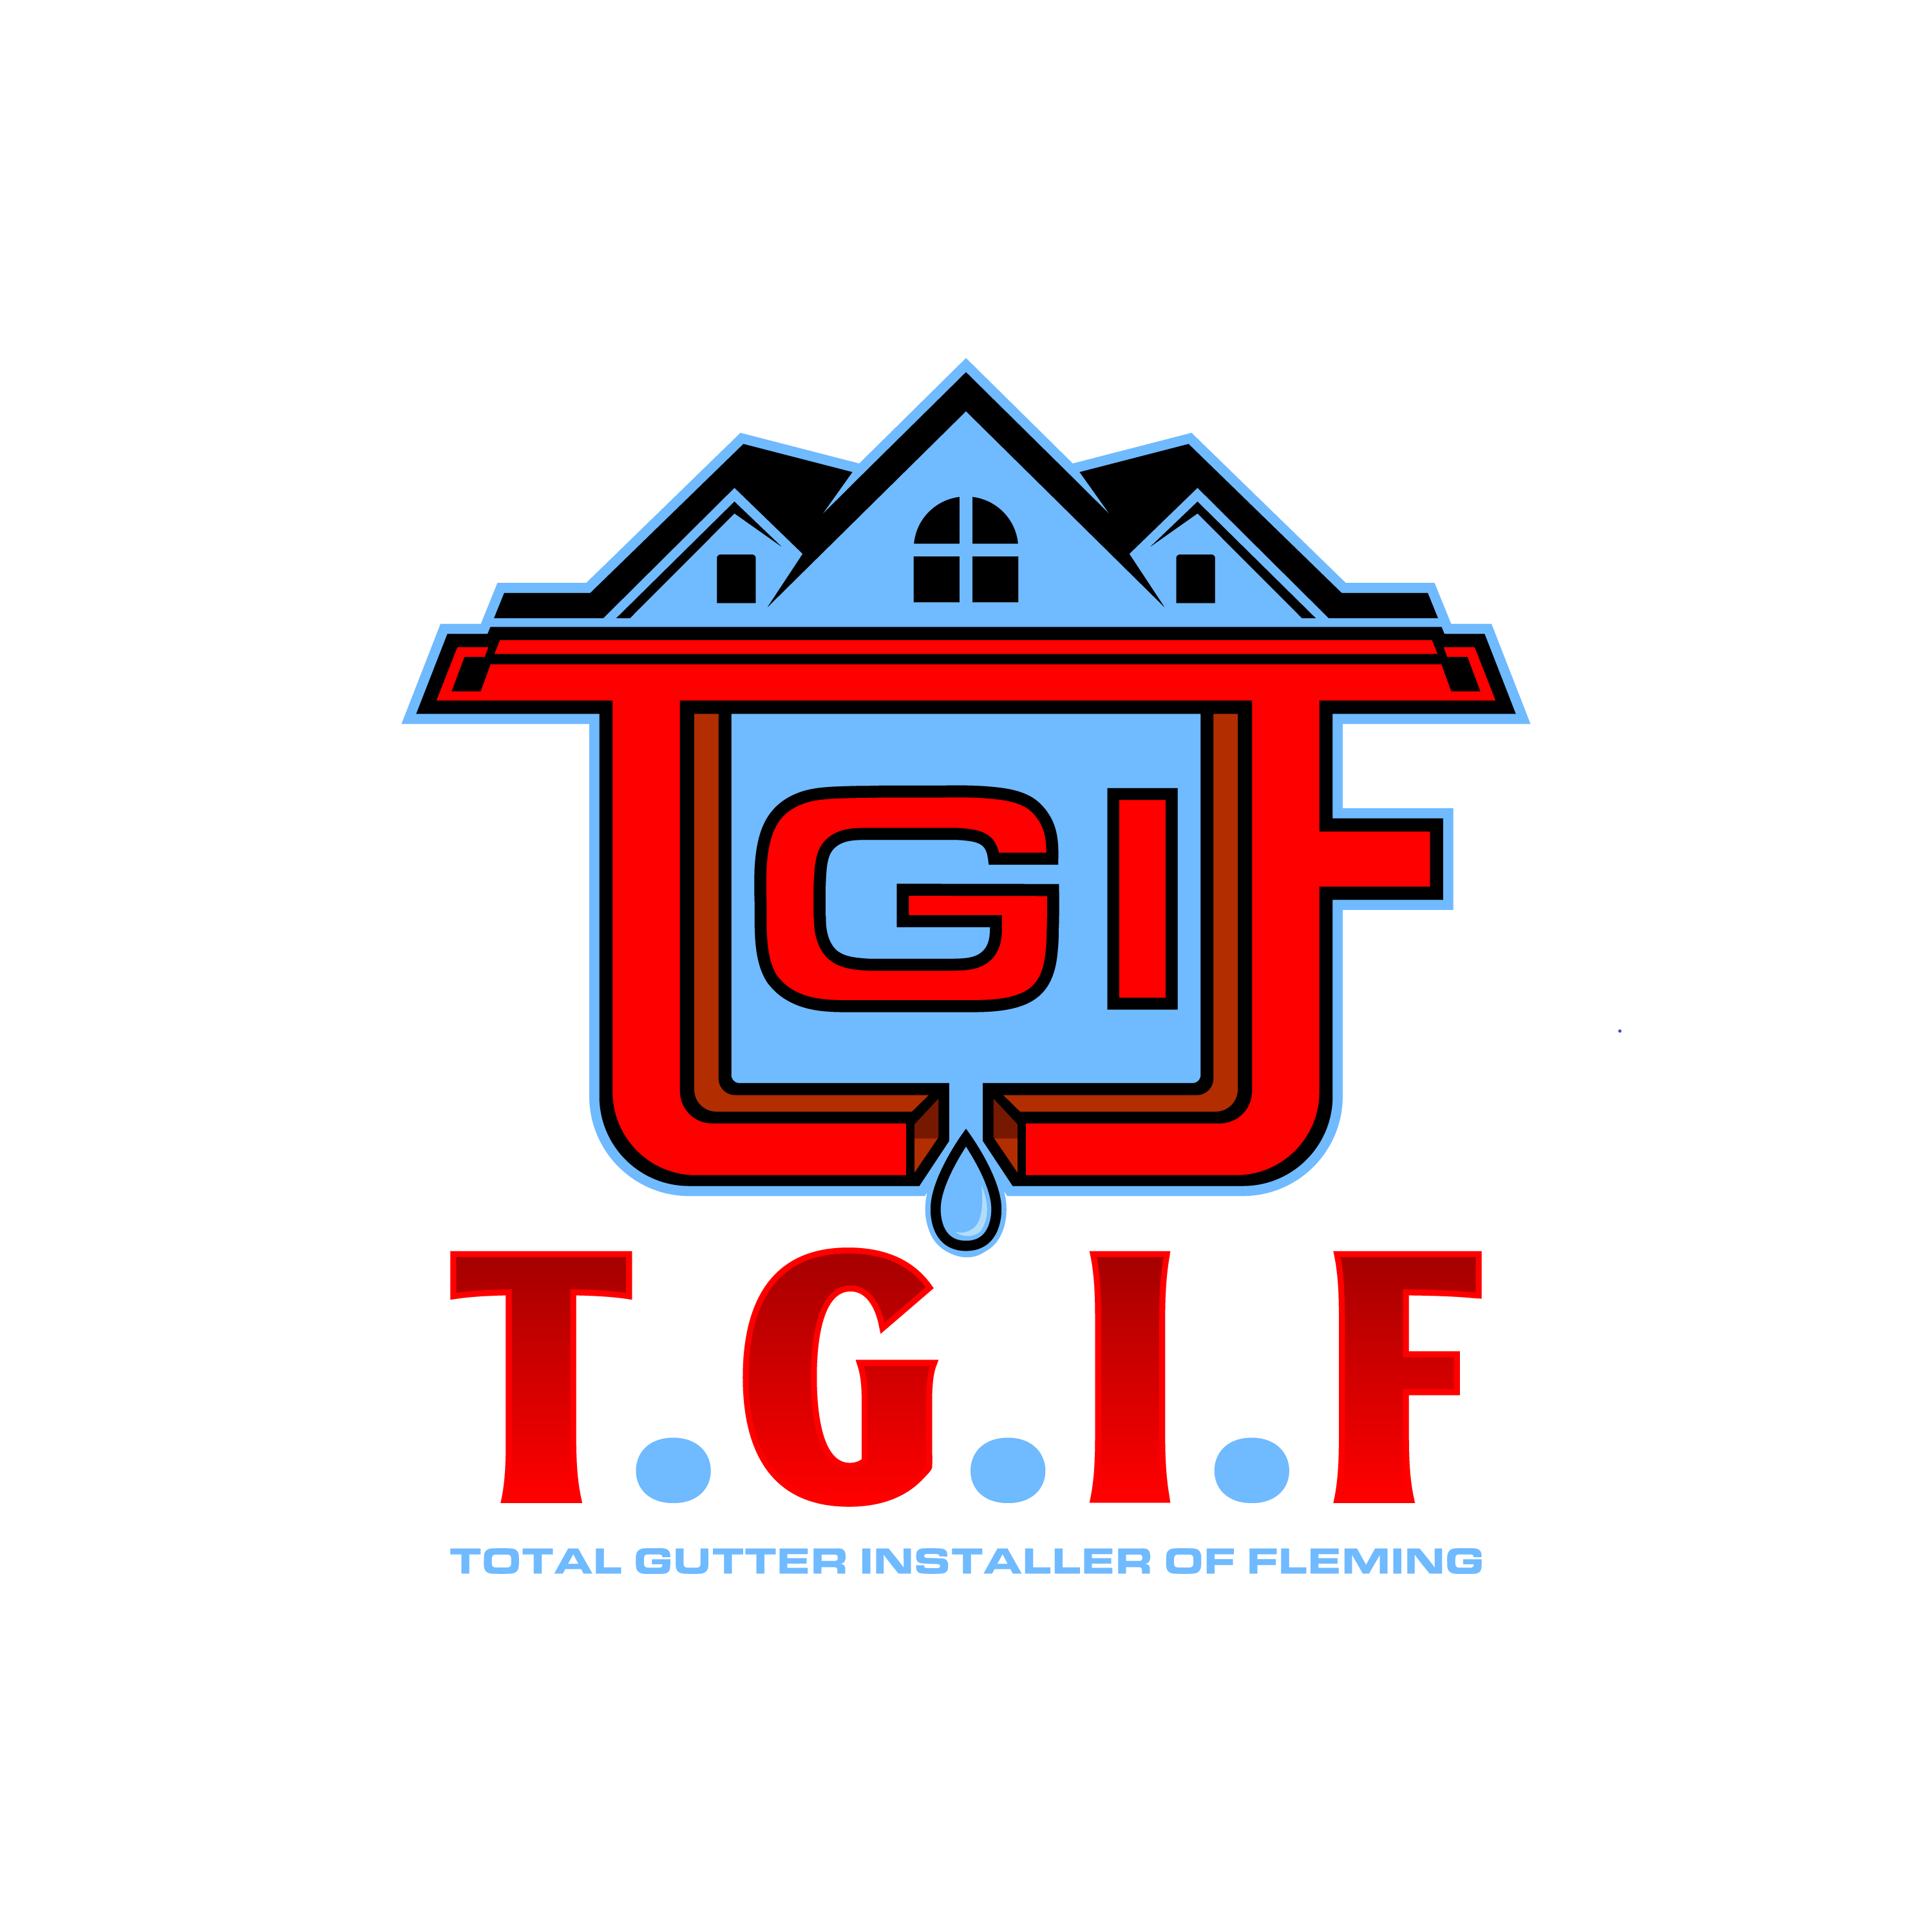 TGIF - Total Gutter Installers of Fleming Logo